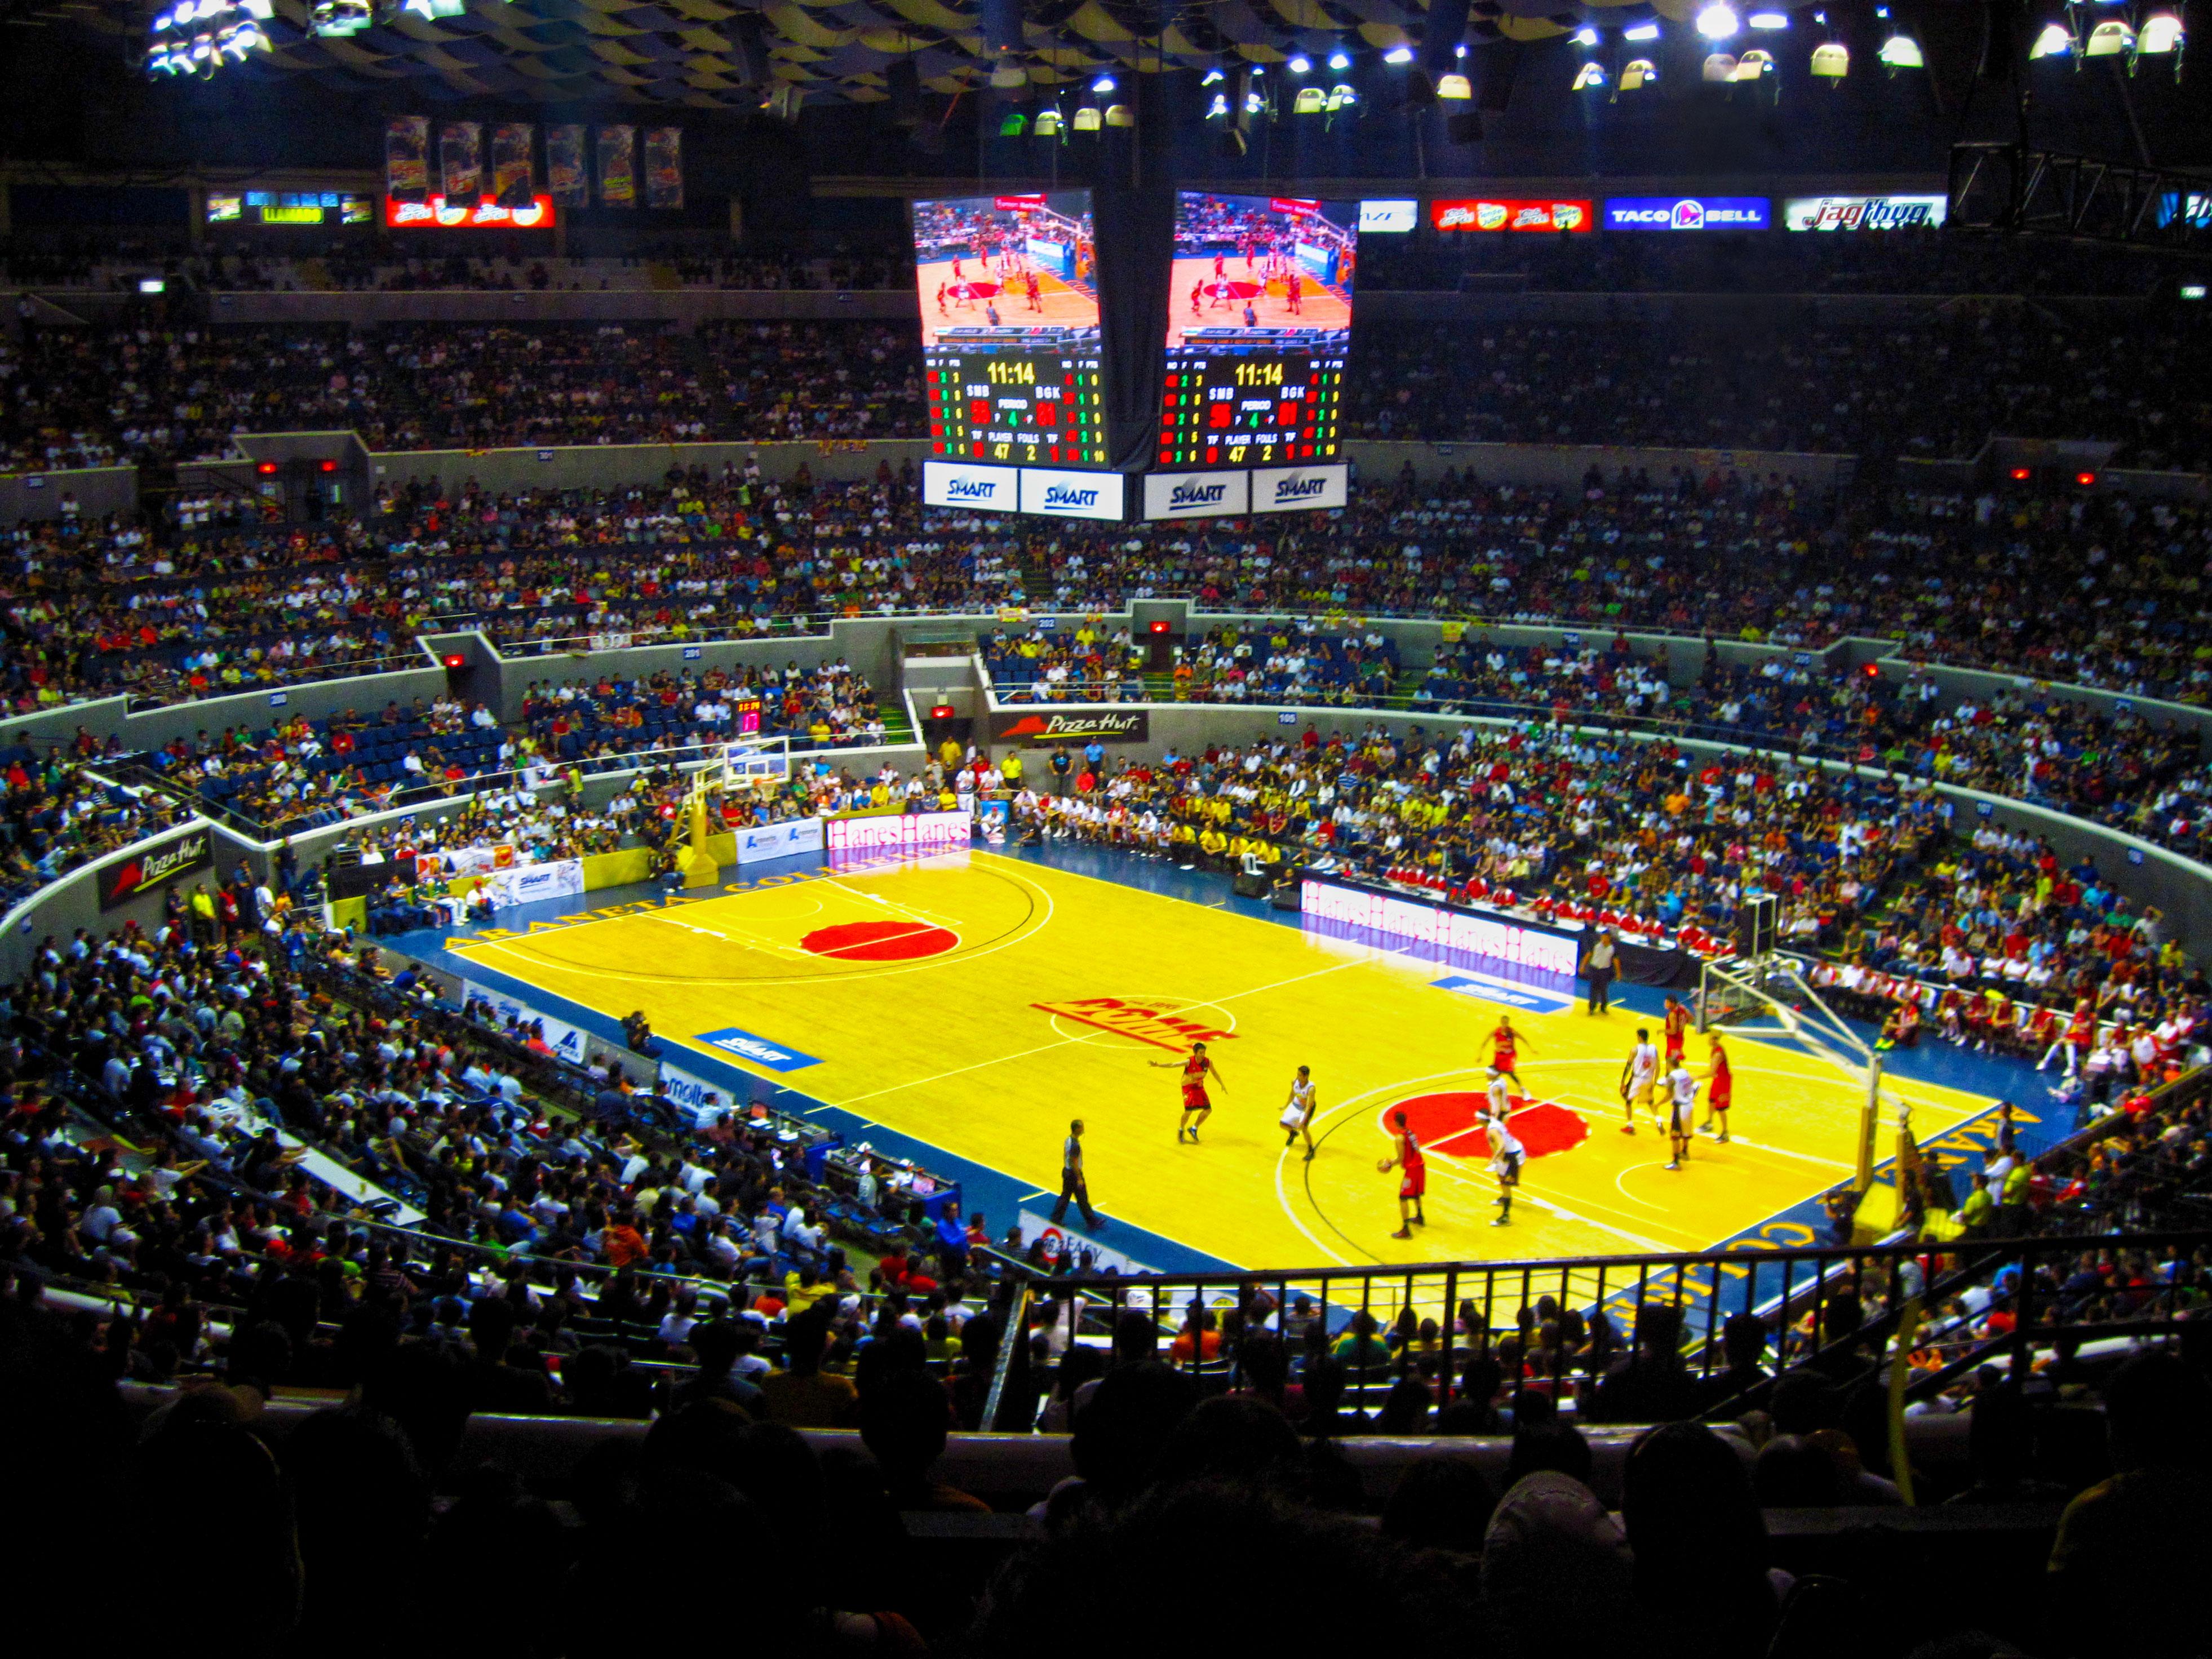 Smart Araneta Coliseum: The Big Dome